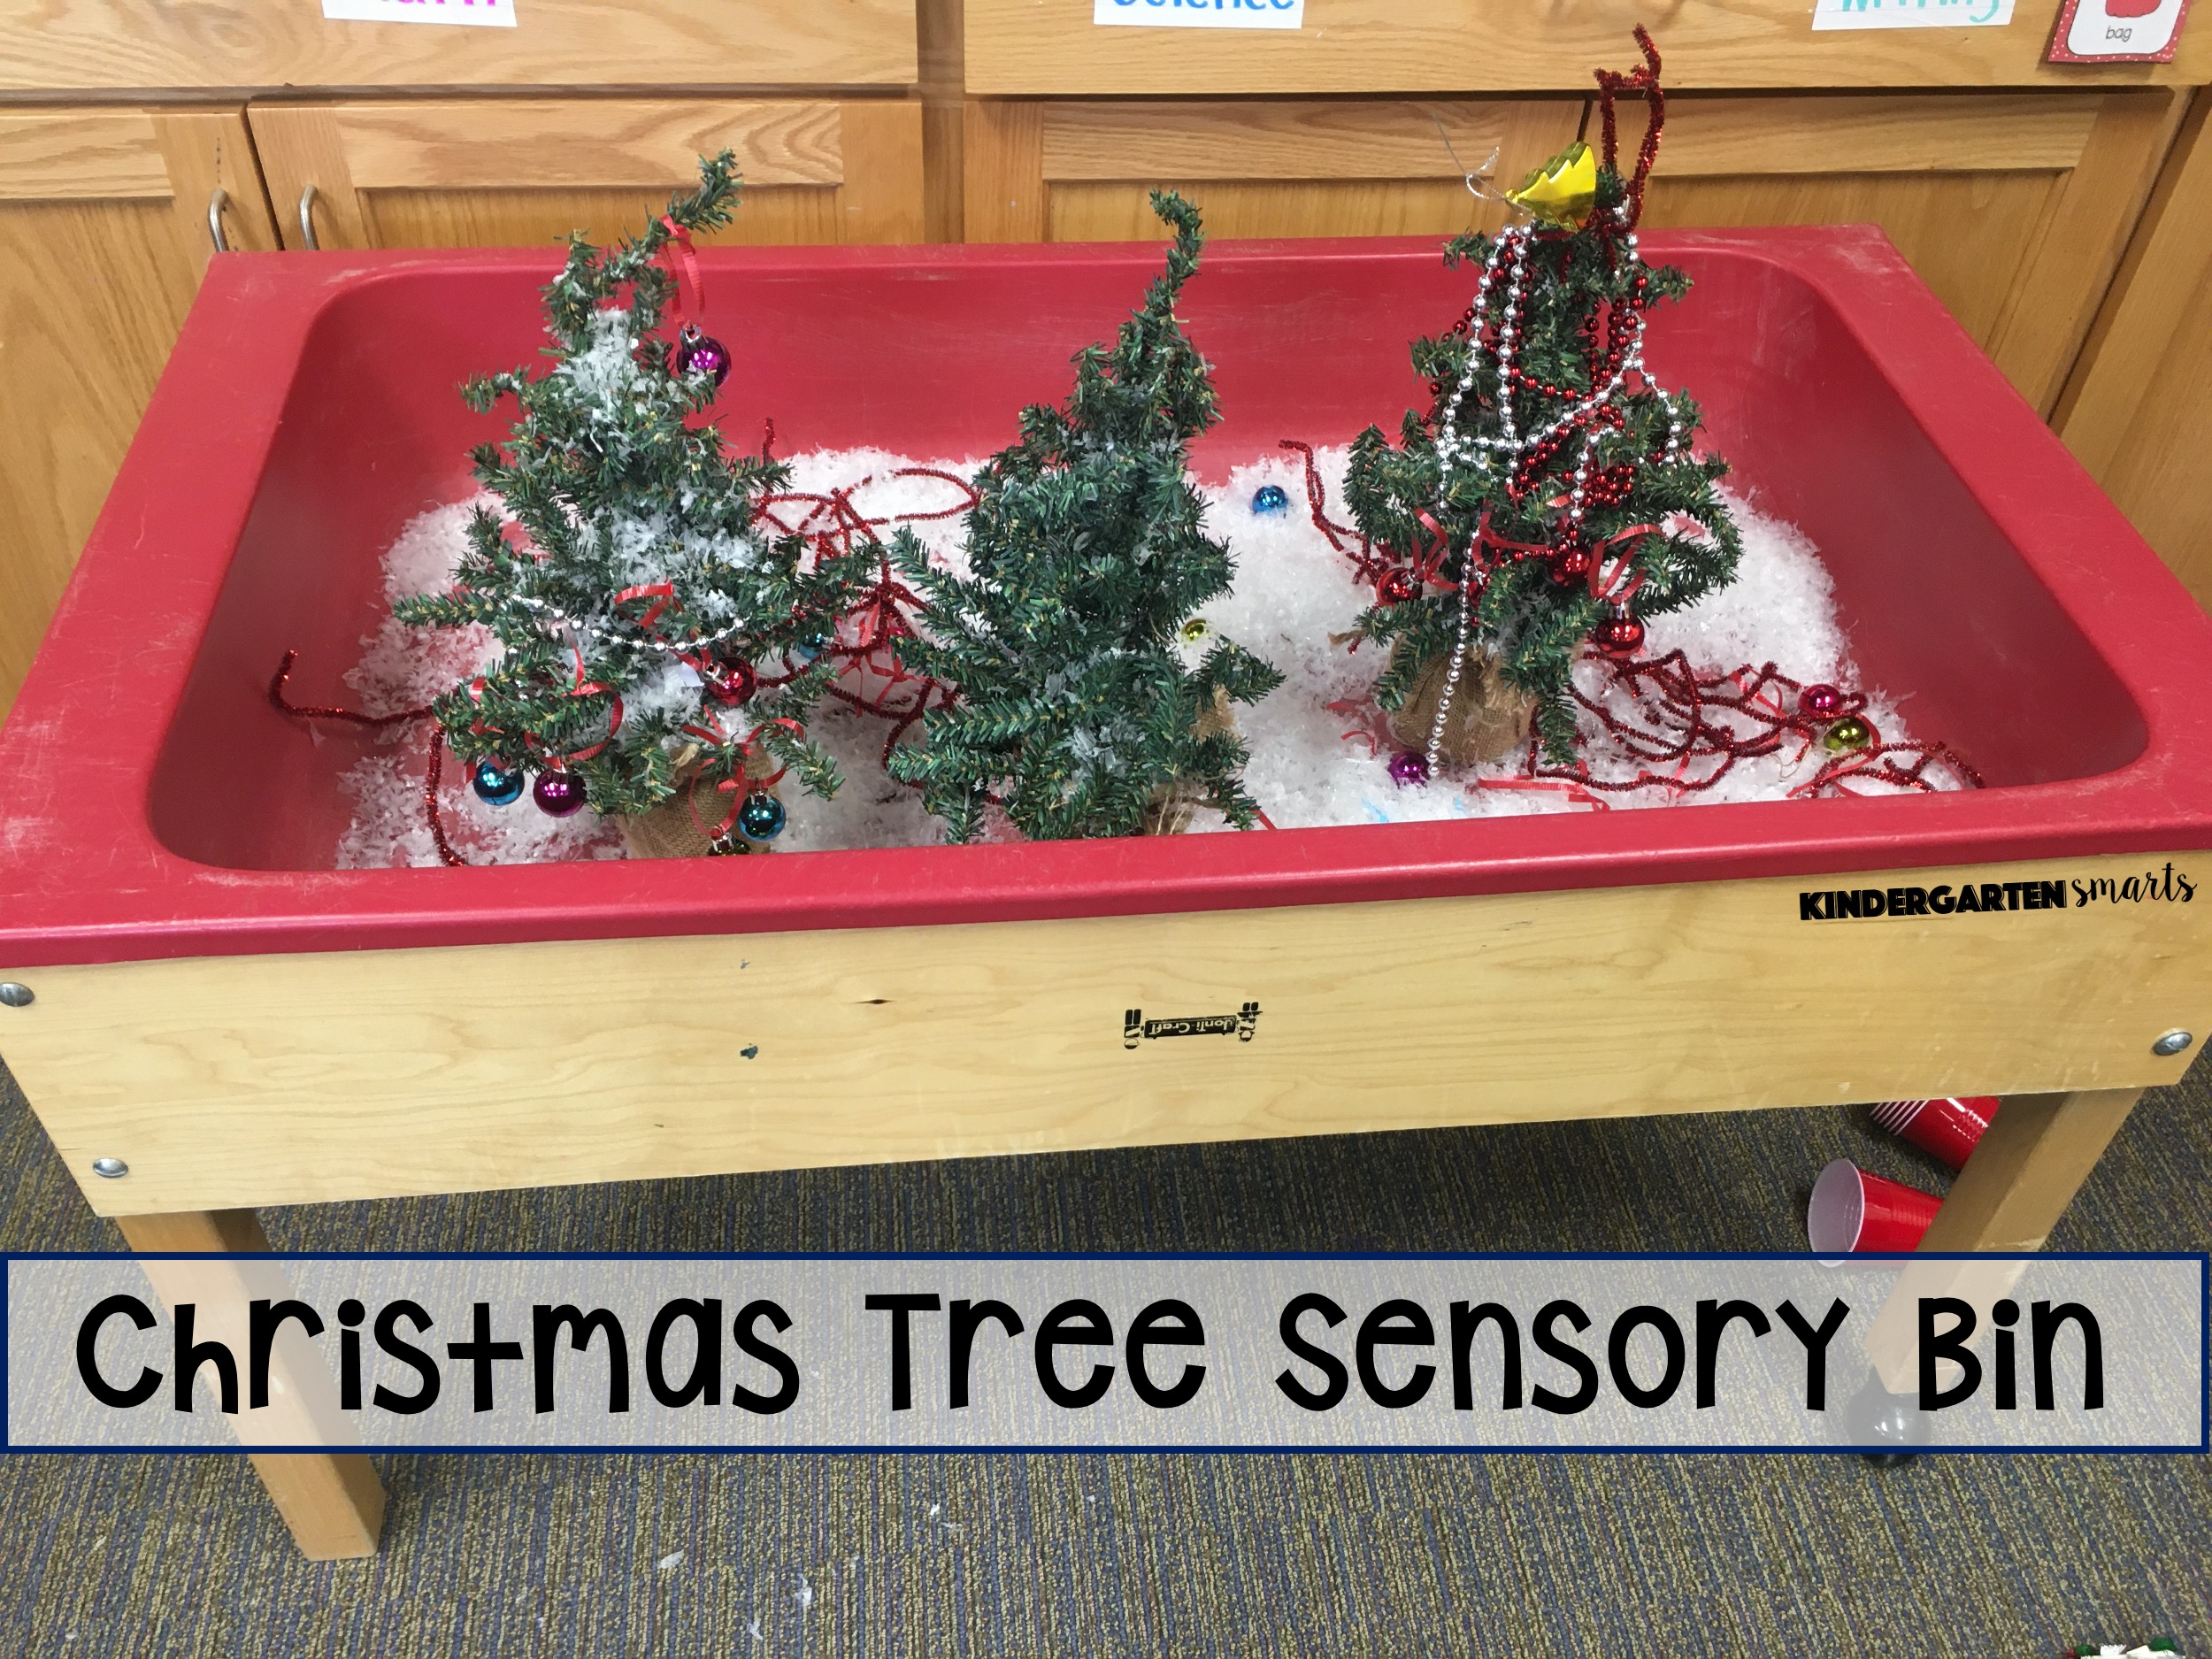 http://kindergartensmarts.com/wp-content/uploads/2020/11/Christmas-Tree-sensory-bin-pic.jpg